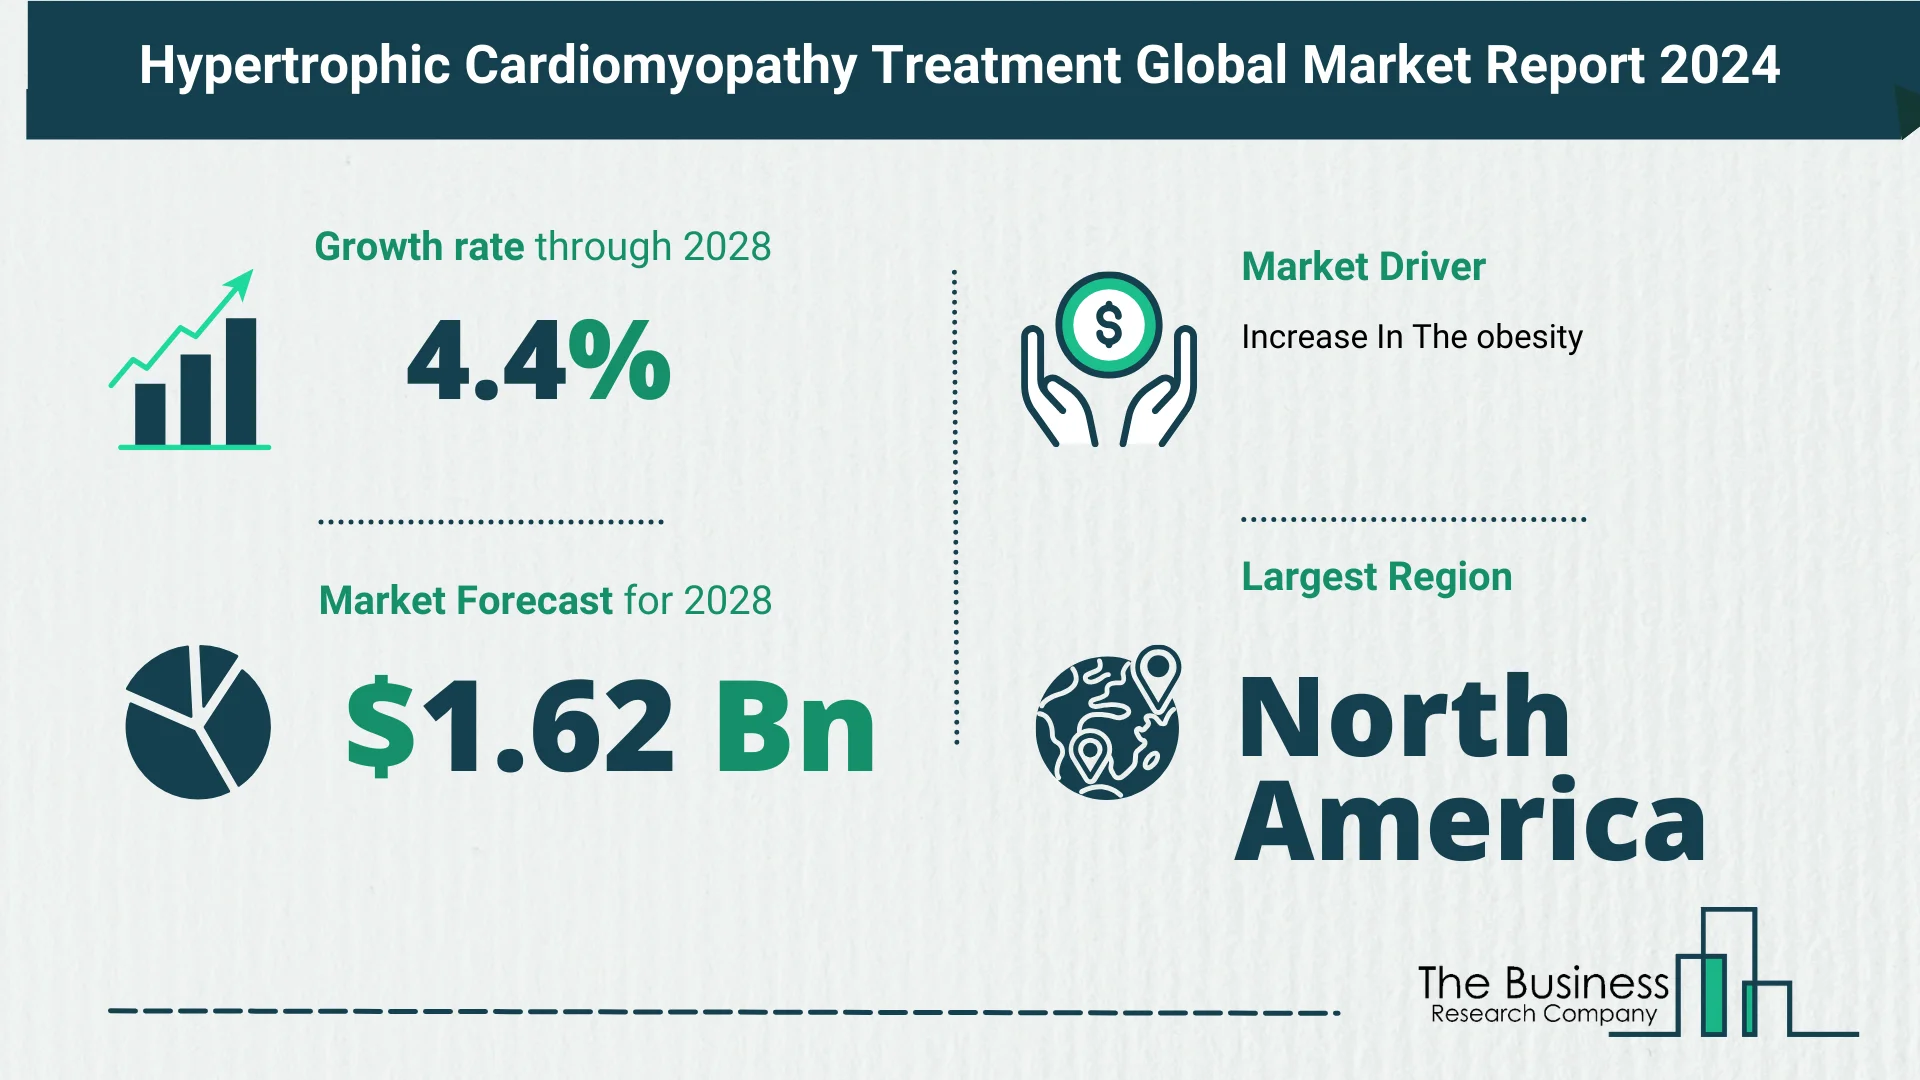 Global Hypertrophic Cardiomyopathy Treatment Market Size